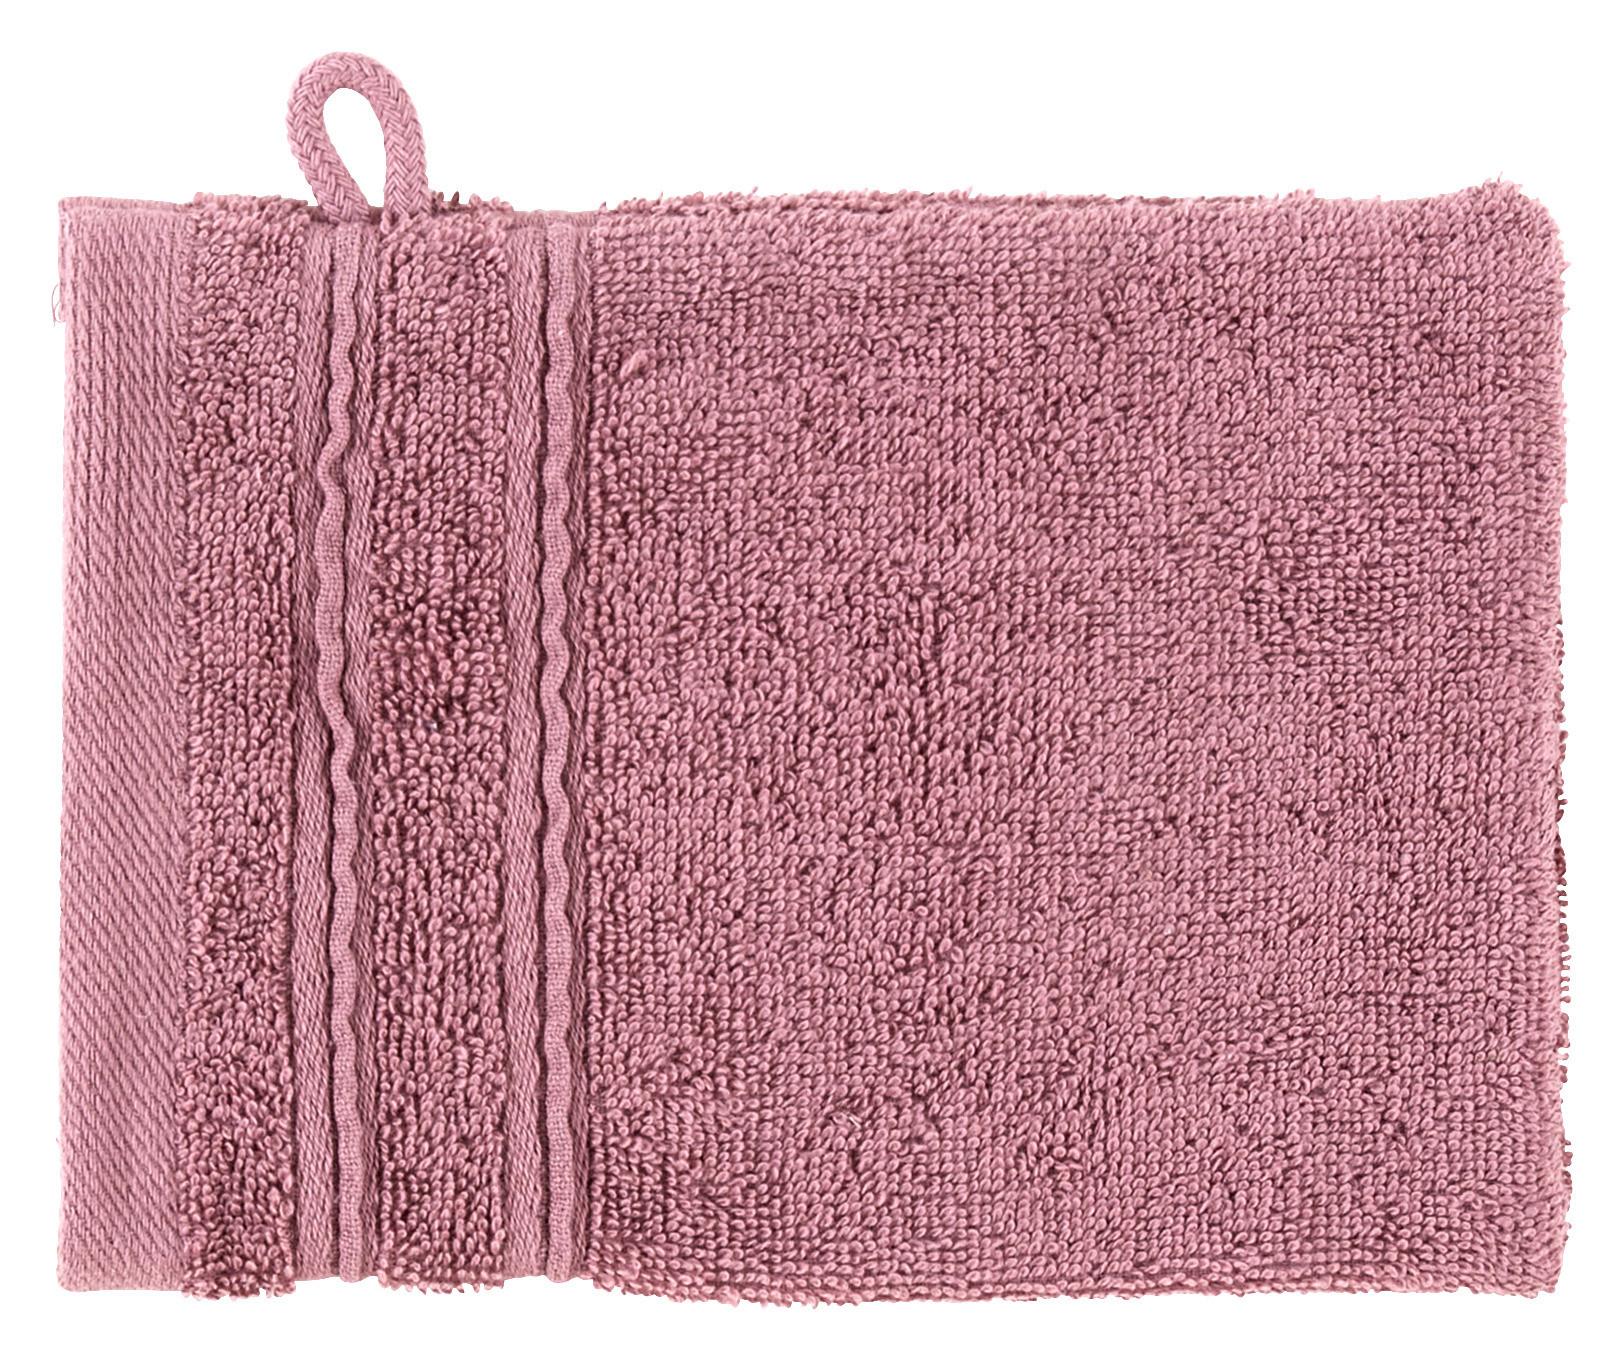 Krpica Za Umivanje Melanie - sivovijolična, tekstil (16/21cm) - Modern Living